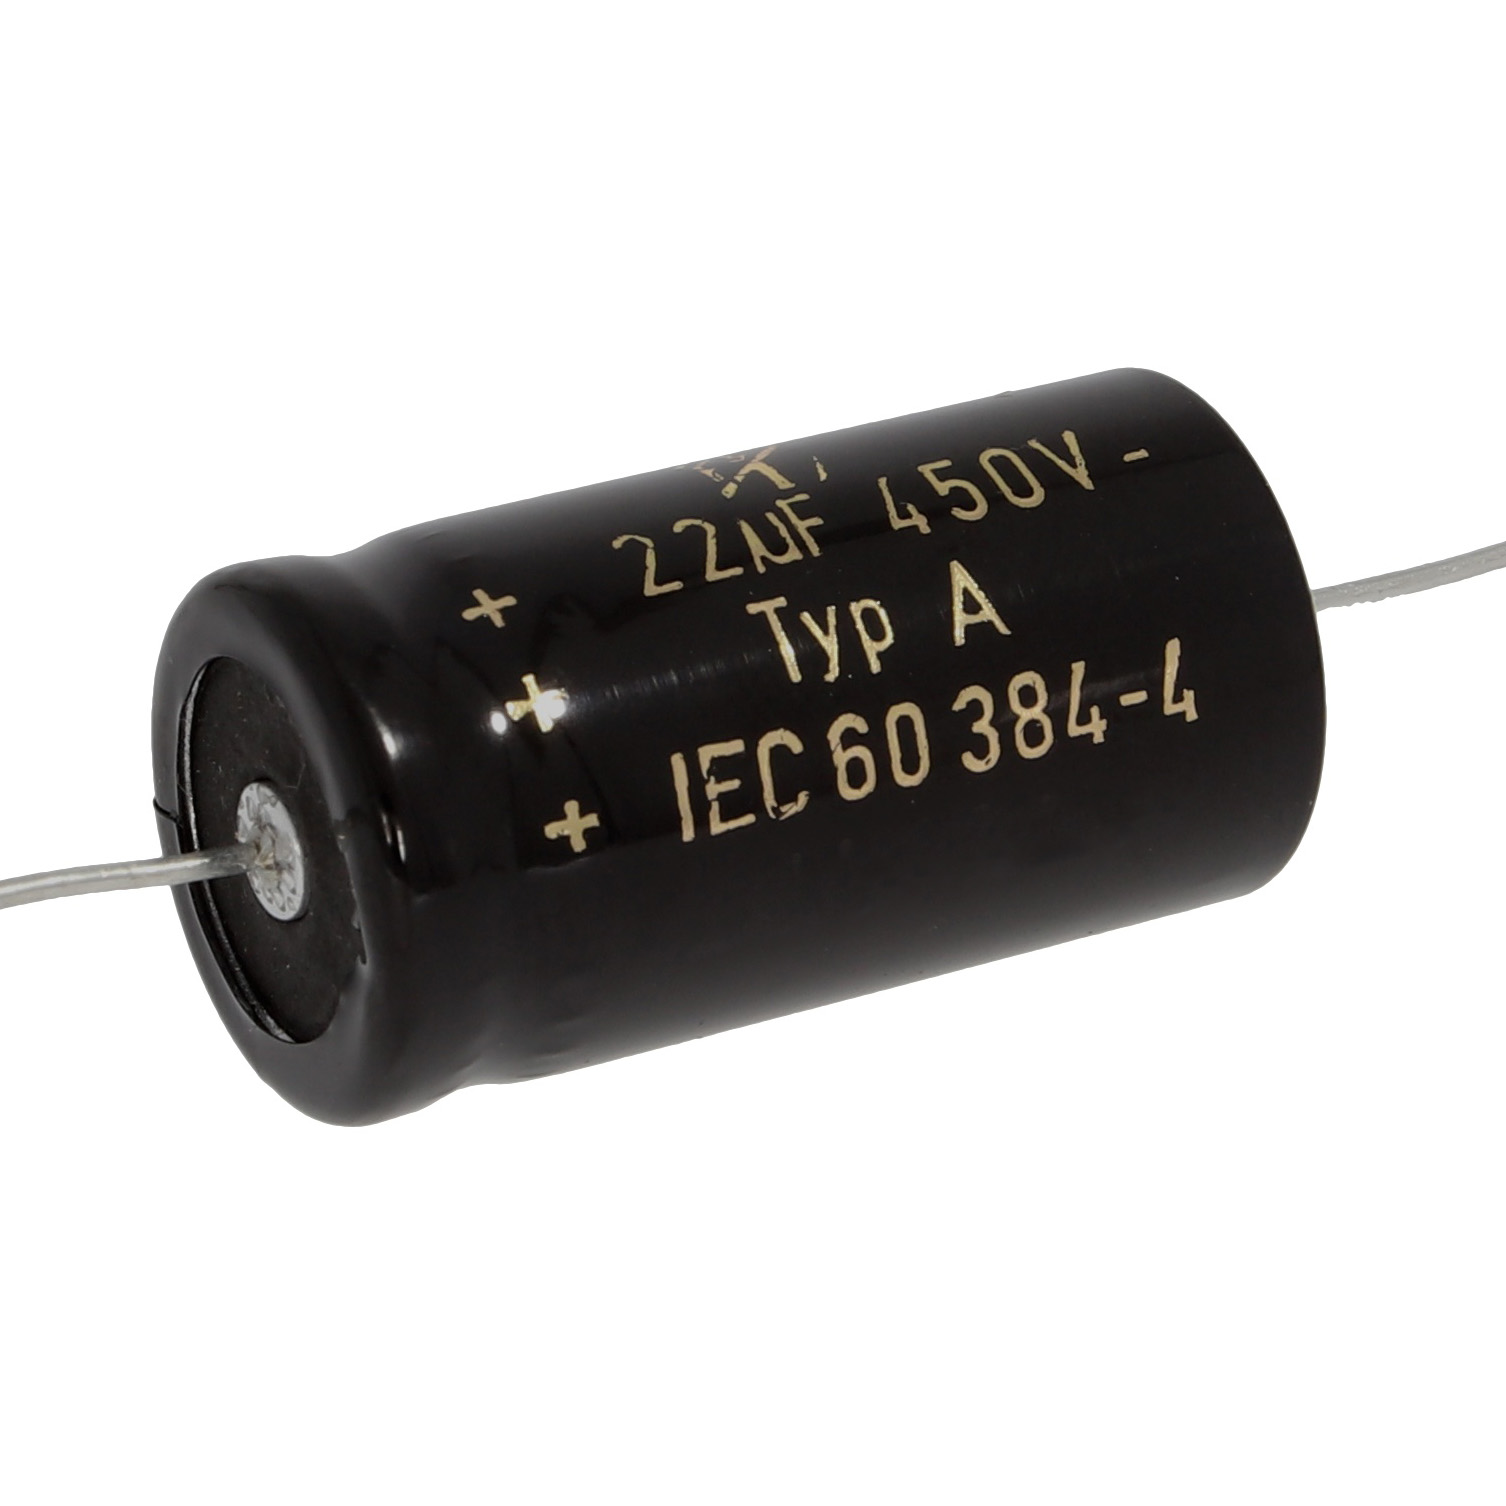 kondensator Kondensator axial 350v 1µF 1MF 1uF 5 stück 